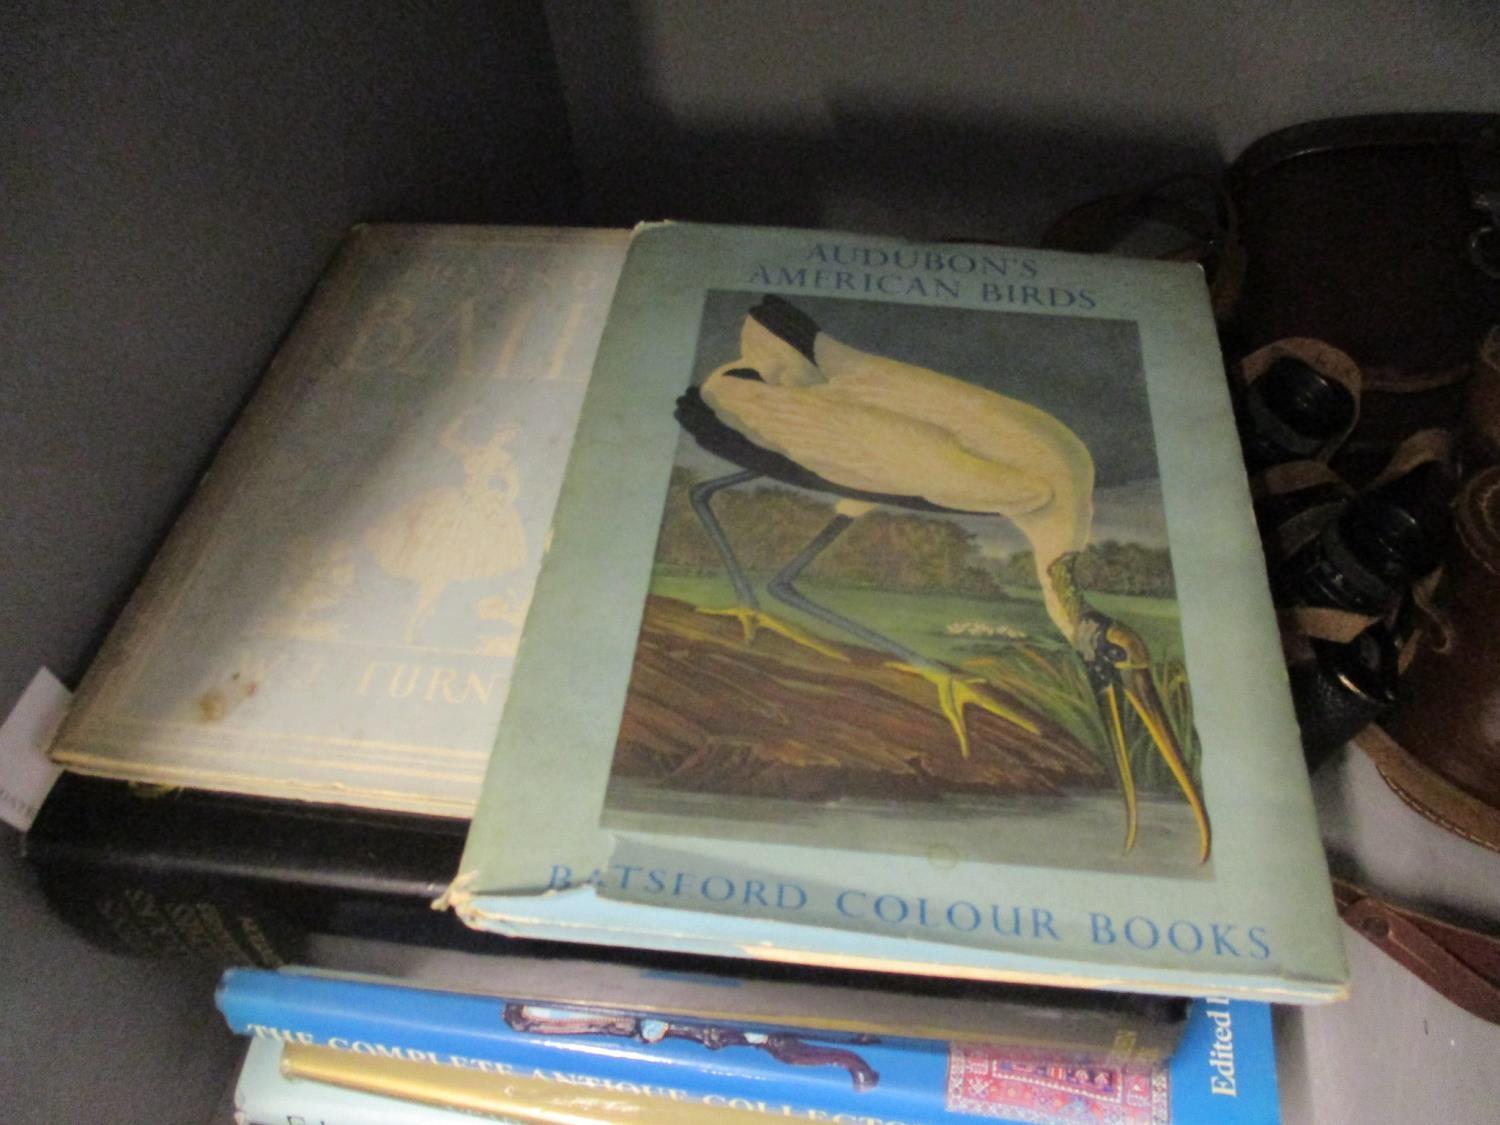 Books to include Audubon's American Birds Batsford colour books, Balletomane's Sketchbook, Britten's - Image 4 of 5